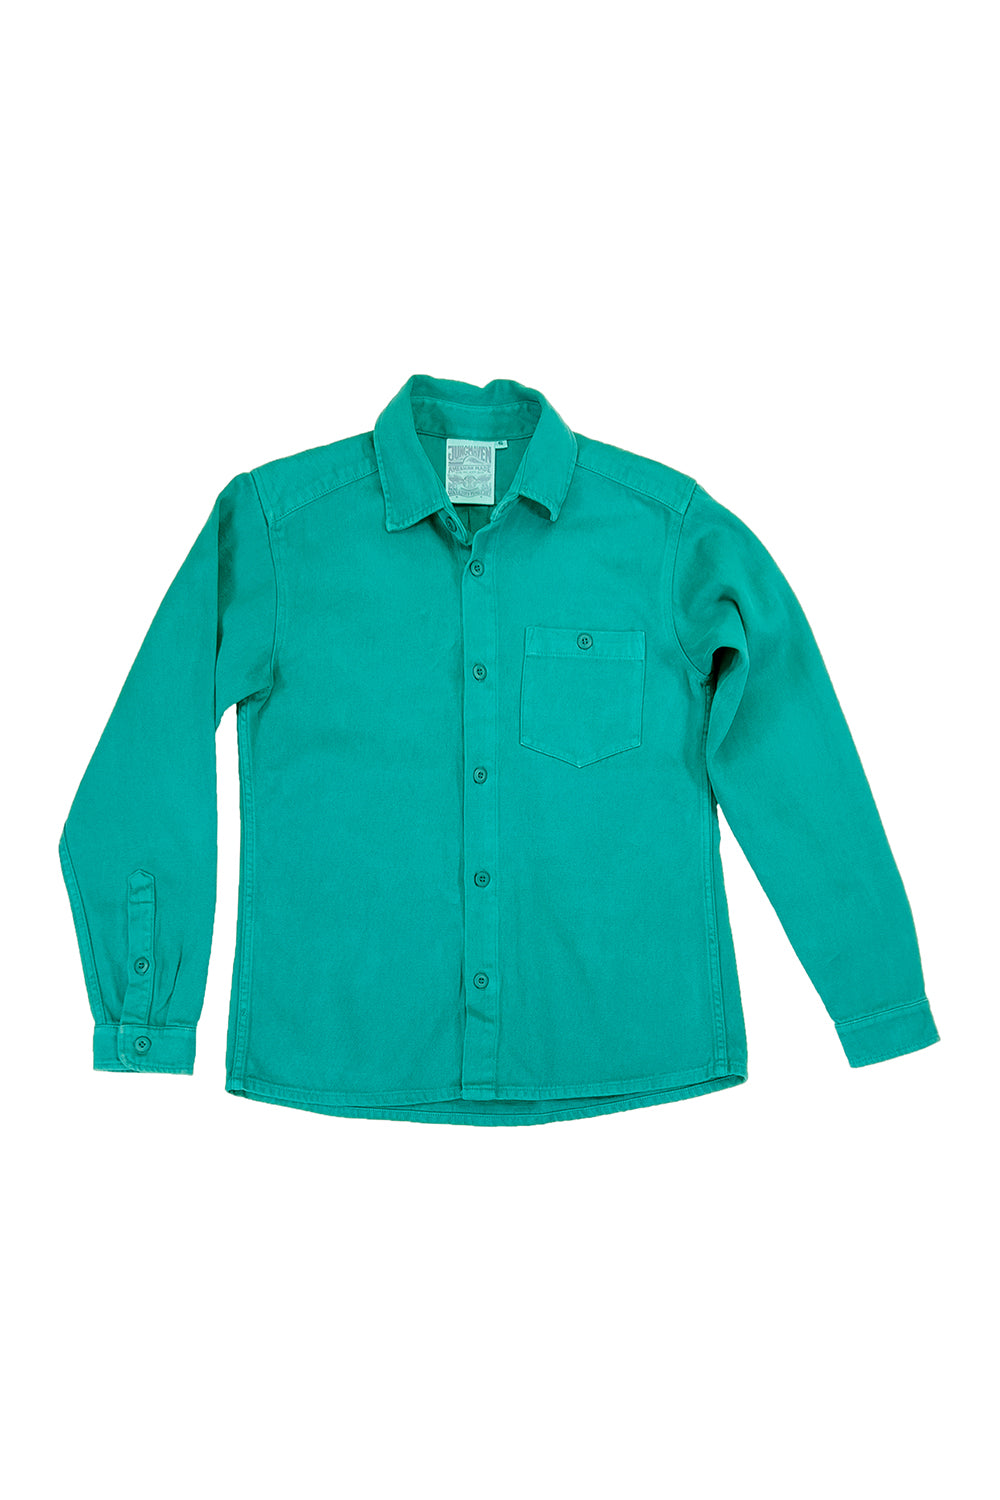 Topanga Shirt | Jungmaven Hemp Clothing & Accessories / Color: Ivy Green